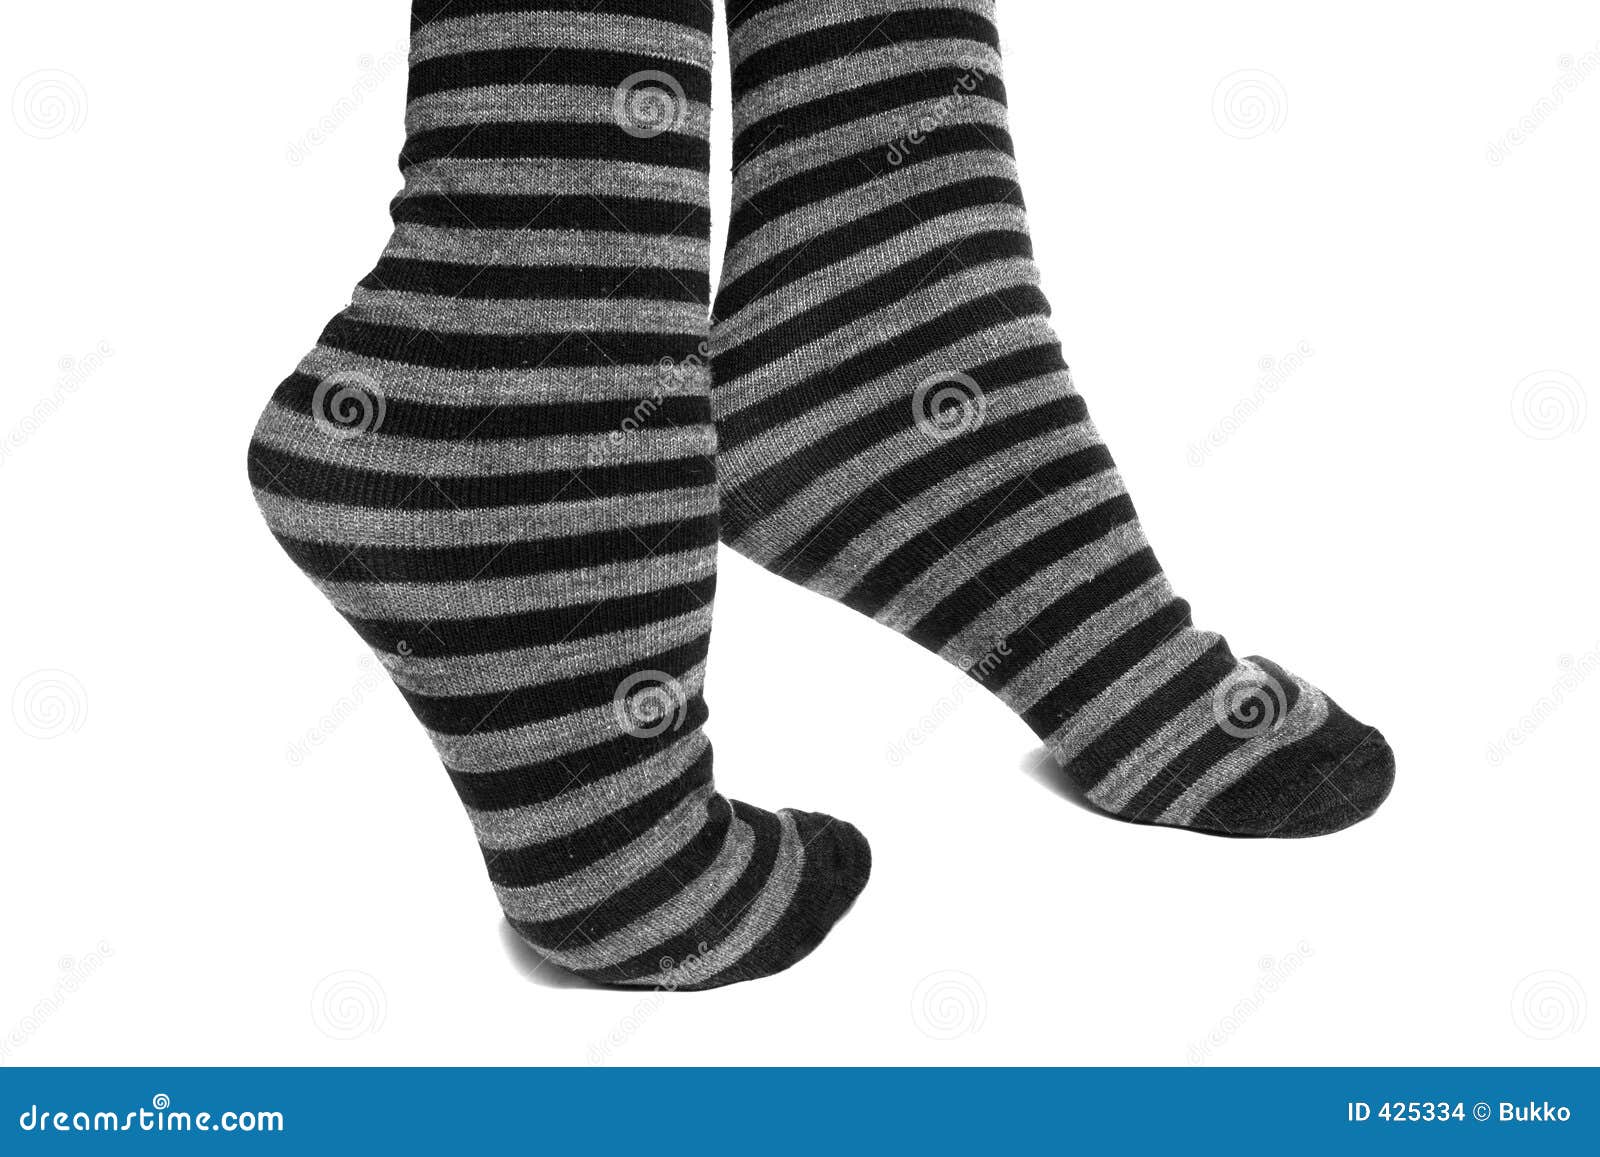 Feet on tiptoe stock photo. Image of tiptoe, warmth, winter - 425334